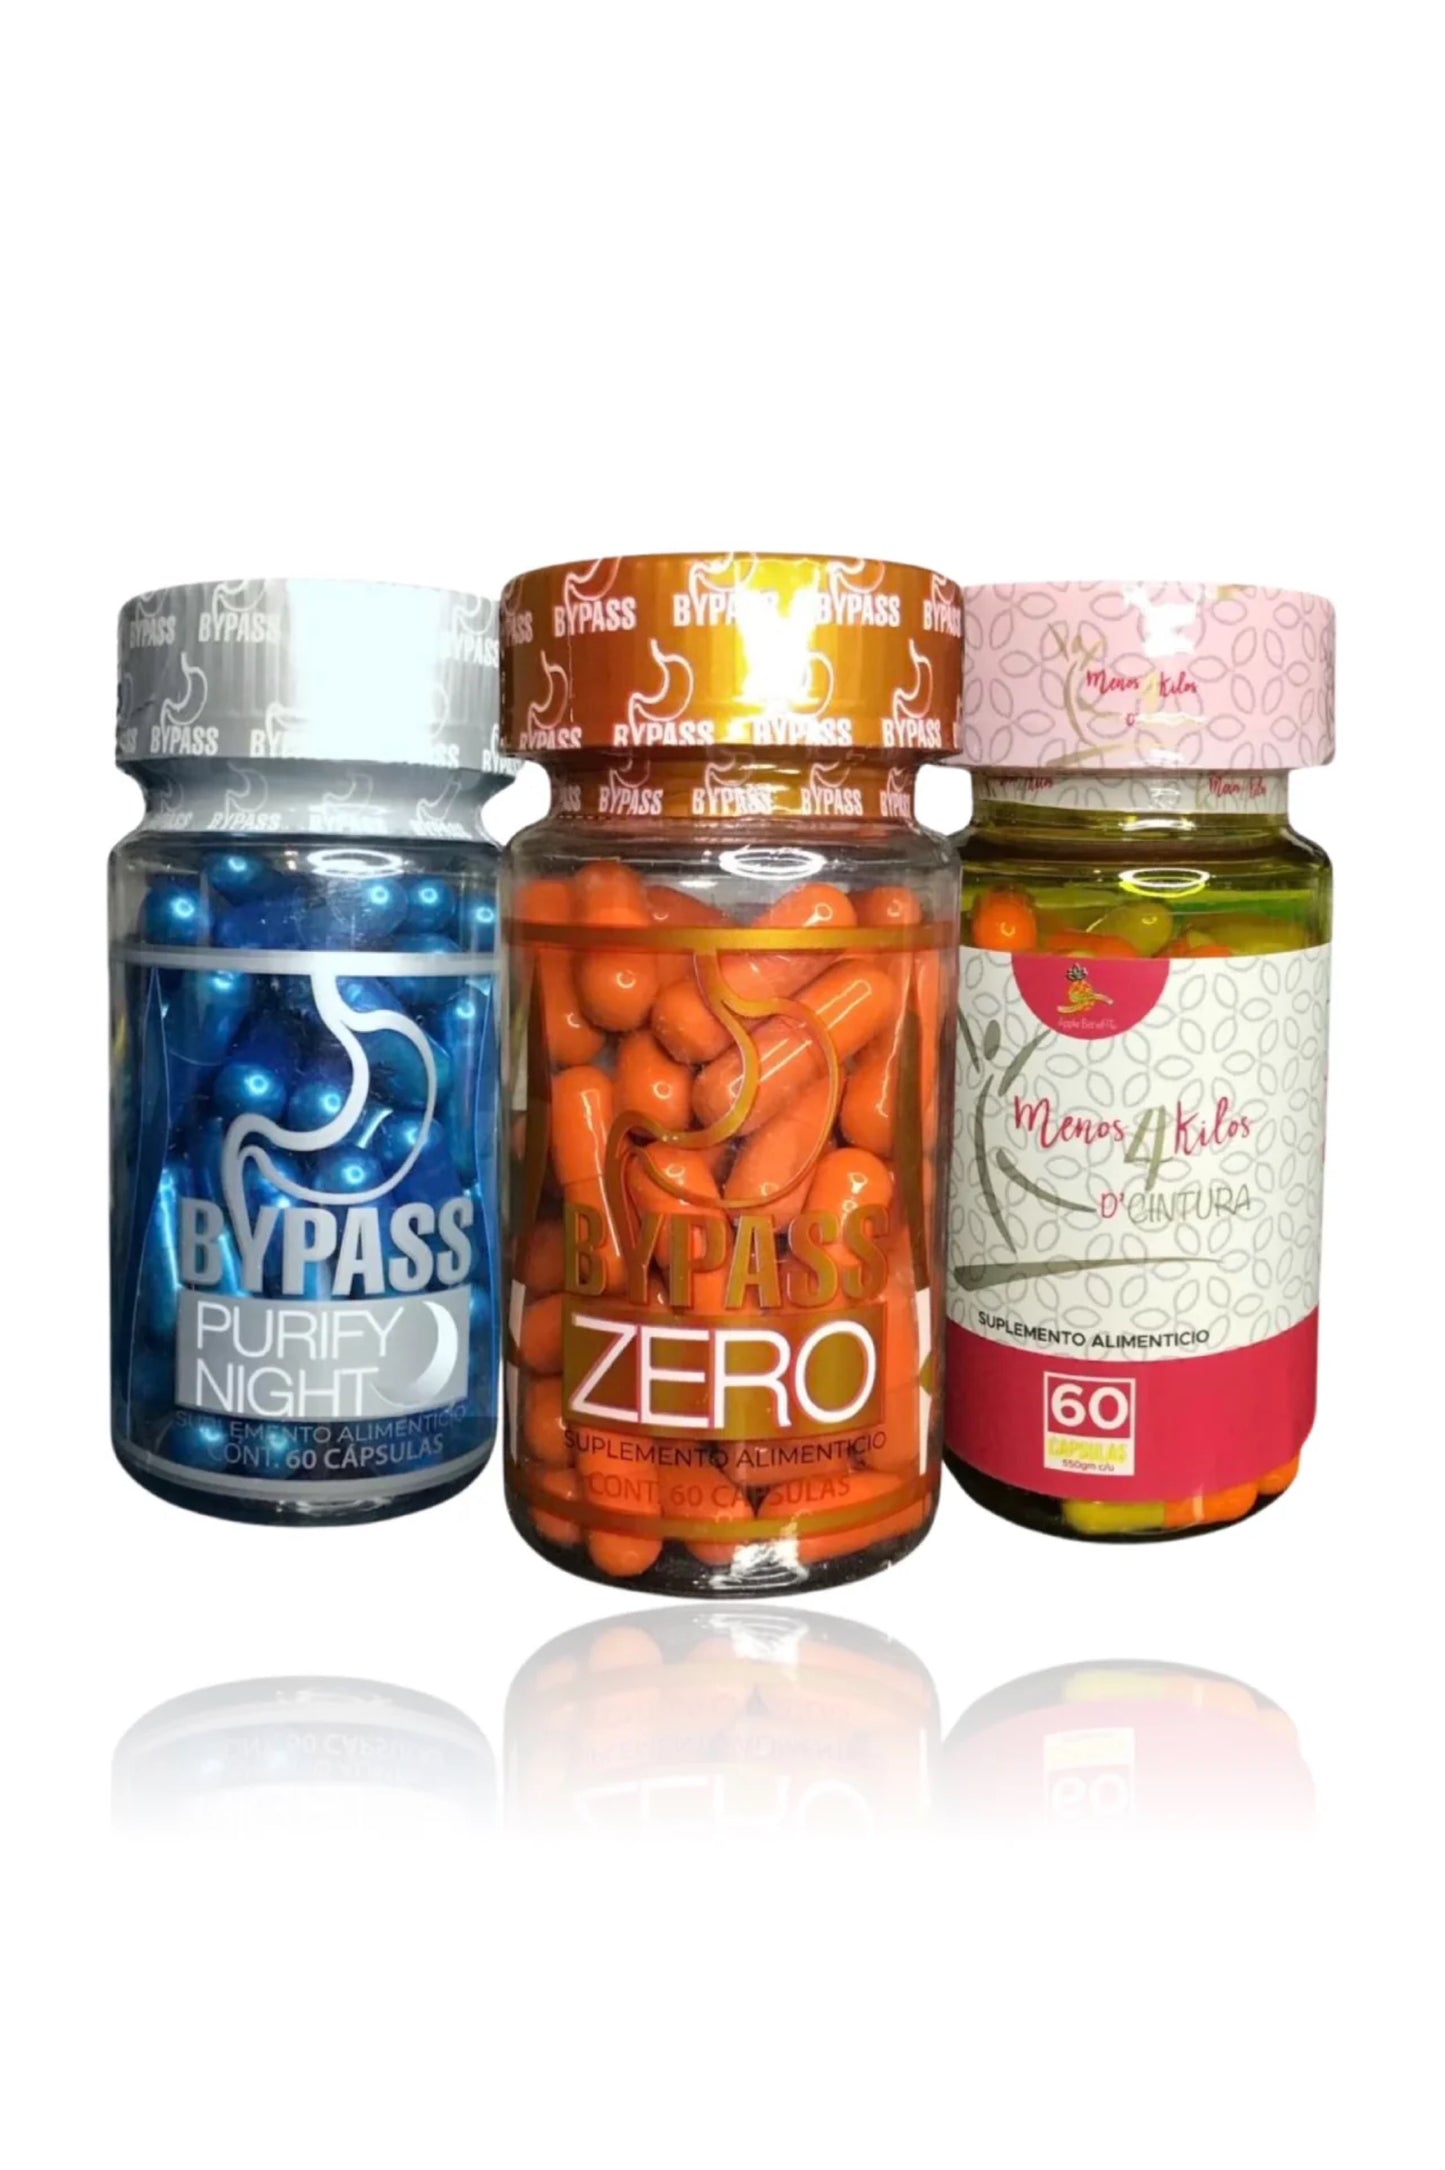 Bypass Purify, Bypass Zero and Menos 4 Kilos Capsules | Diabetic Kit